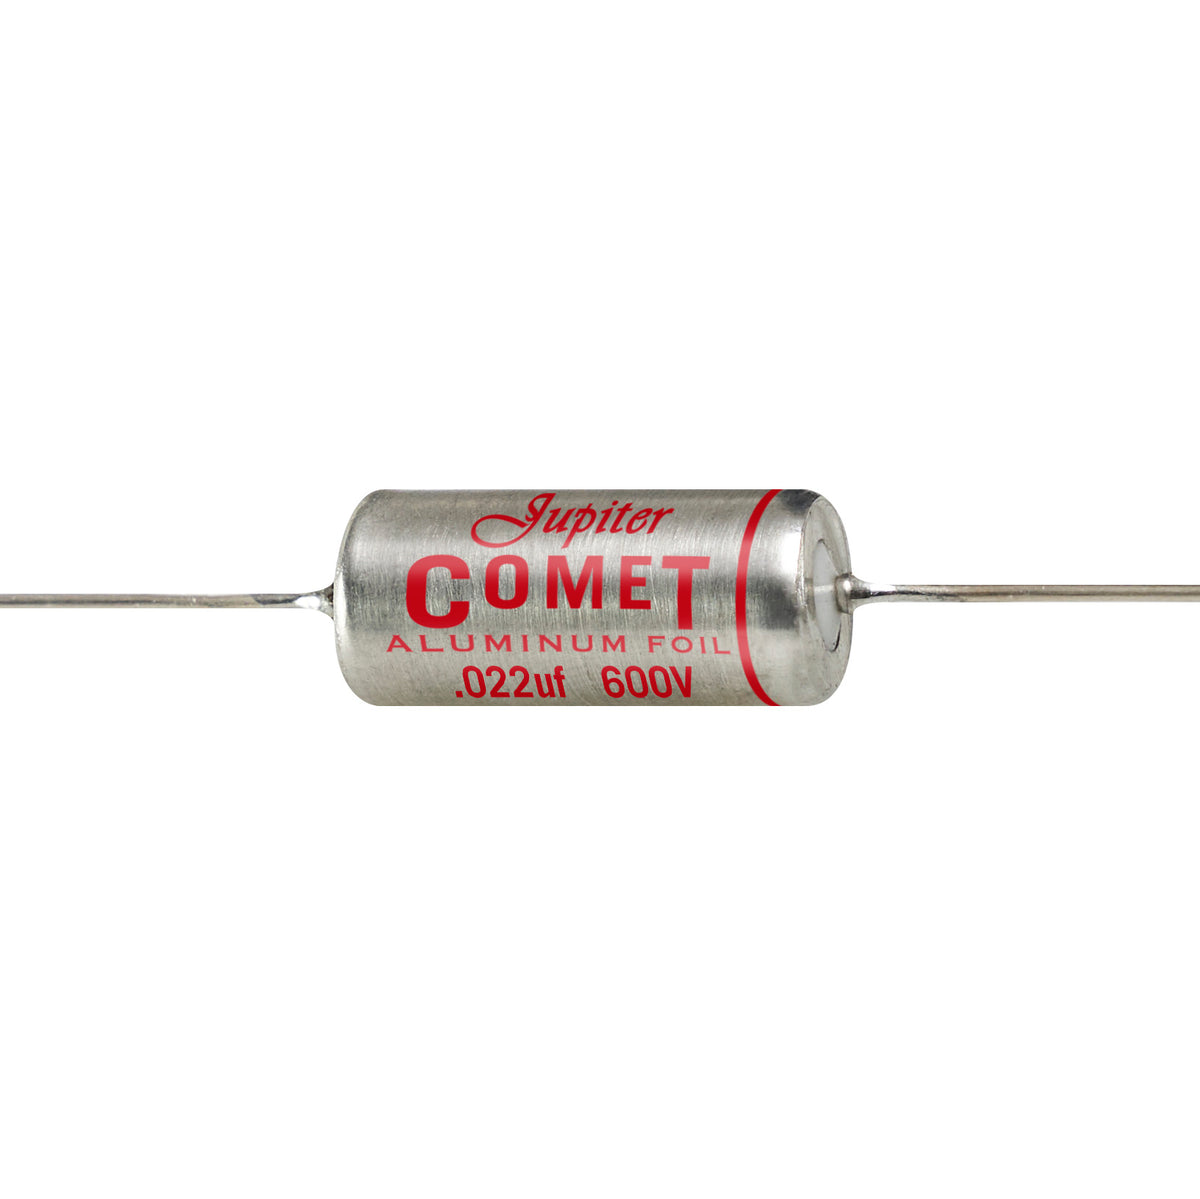 Comet - Aluminum Foil Paper-in-Oil Capacitors, Mineral Oil